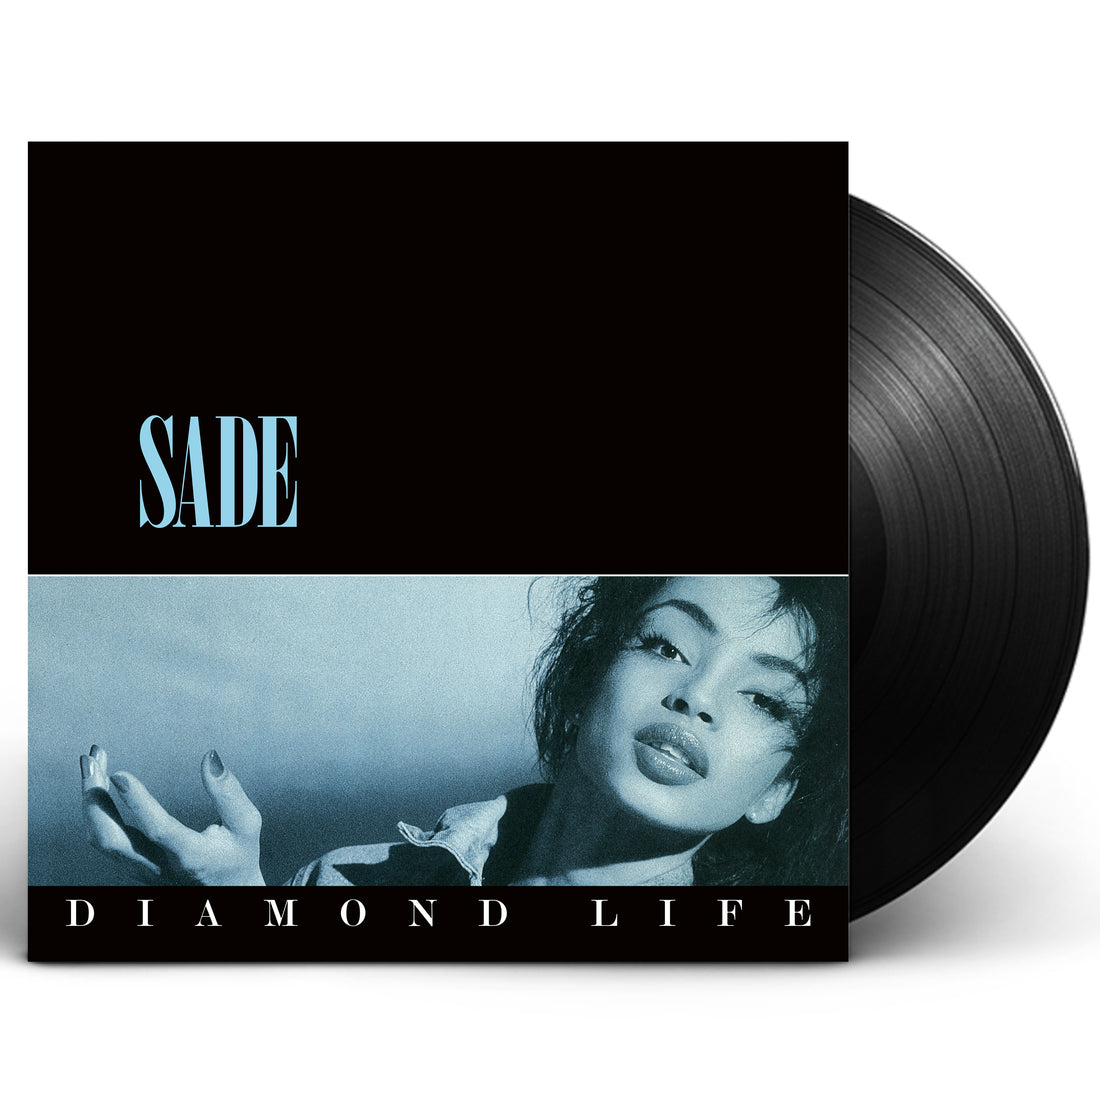 Sade "Diamond Life" LP Vinyl